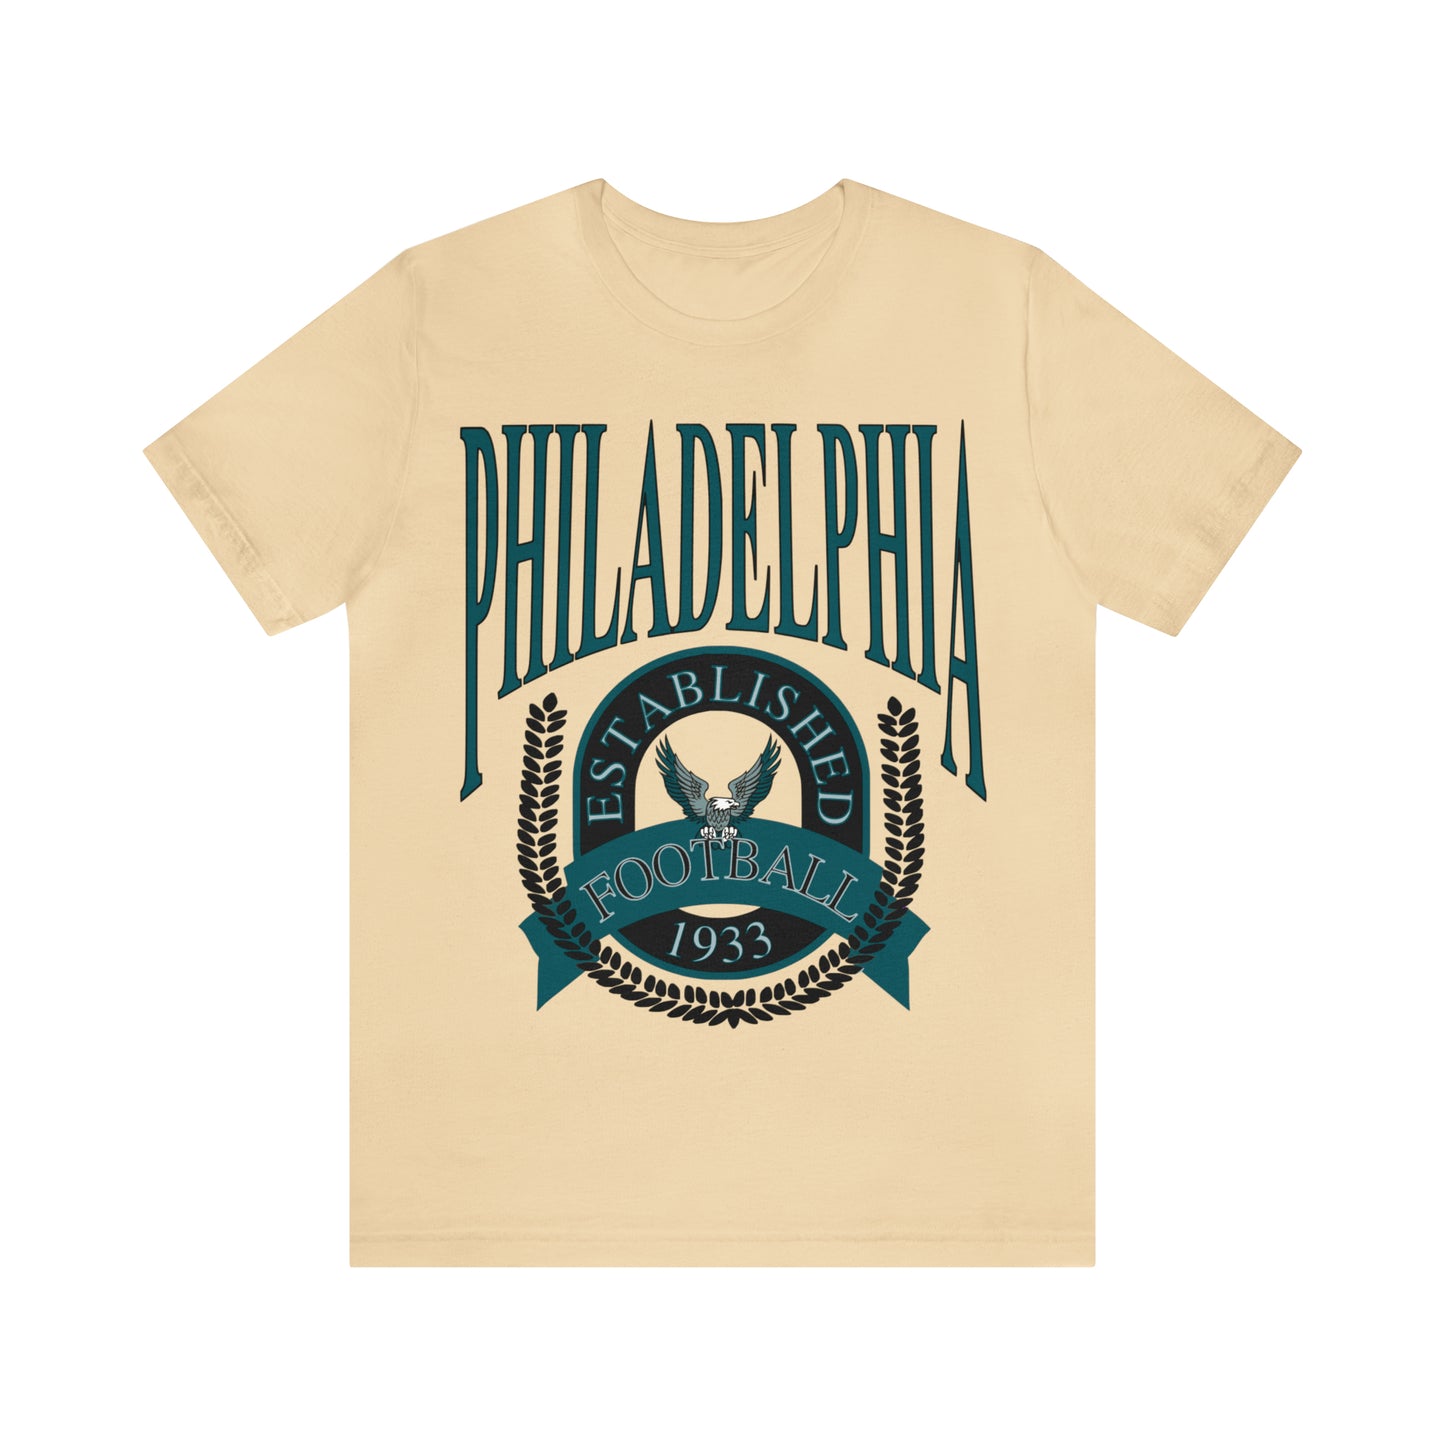 Throwback Vintage Philadelphia Eagles Tee - 90's Short Sleeve T-Shirt - NFL Football Men's & Women's Apparel - Design 1